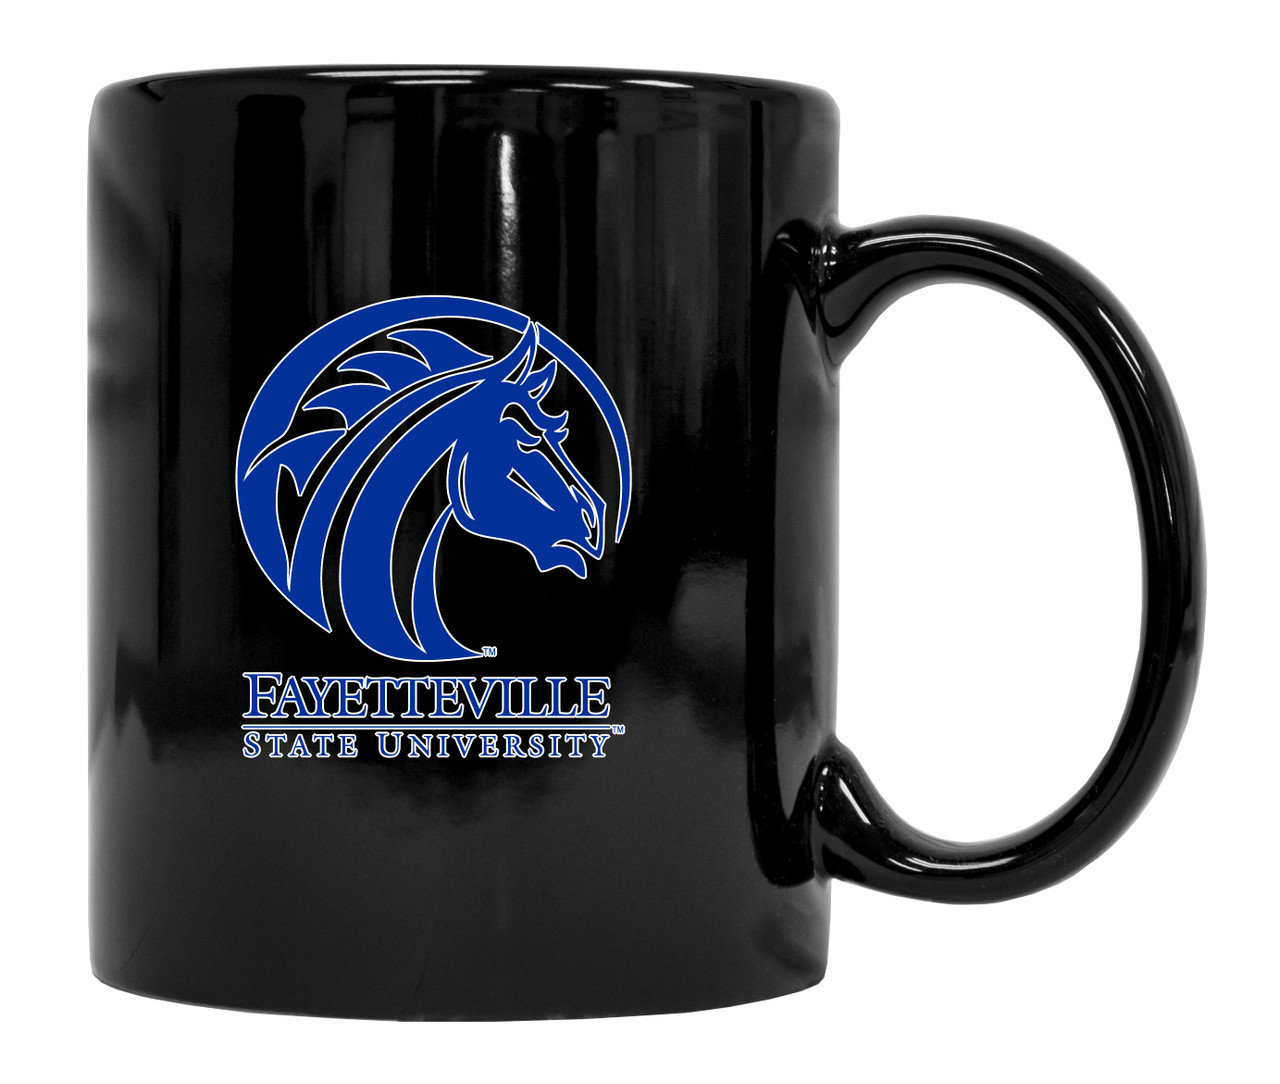 Fayetteville State University Black Ceramic Mug (Black).